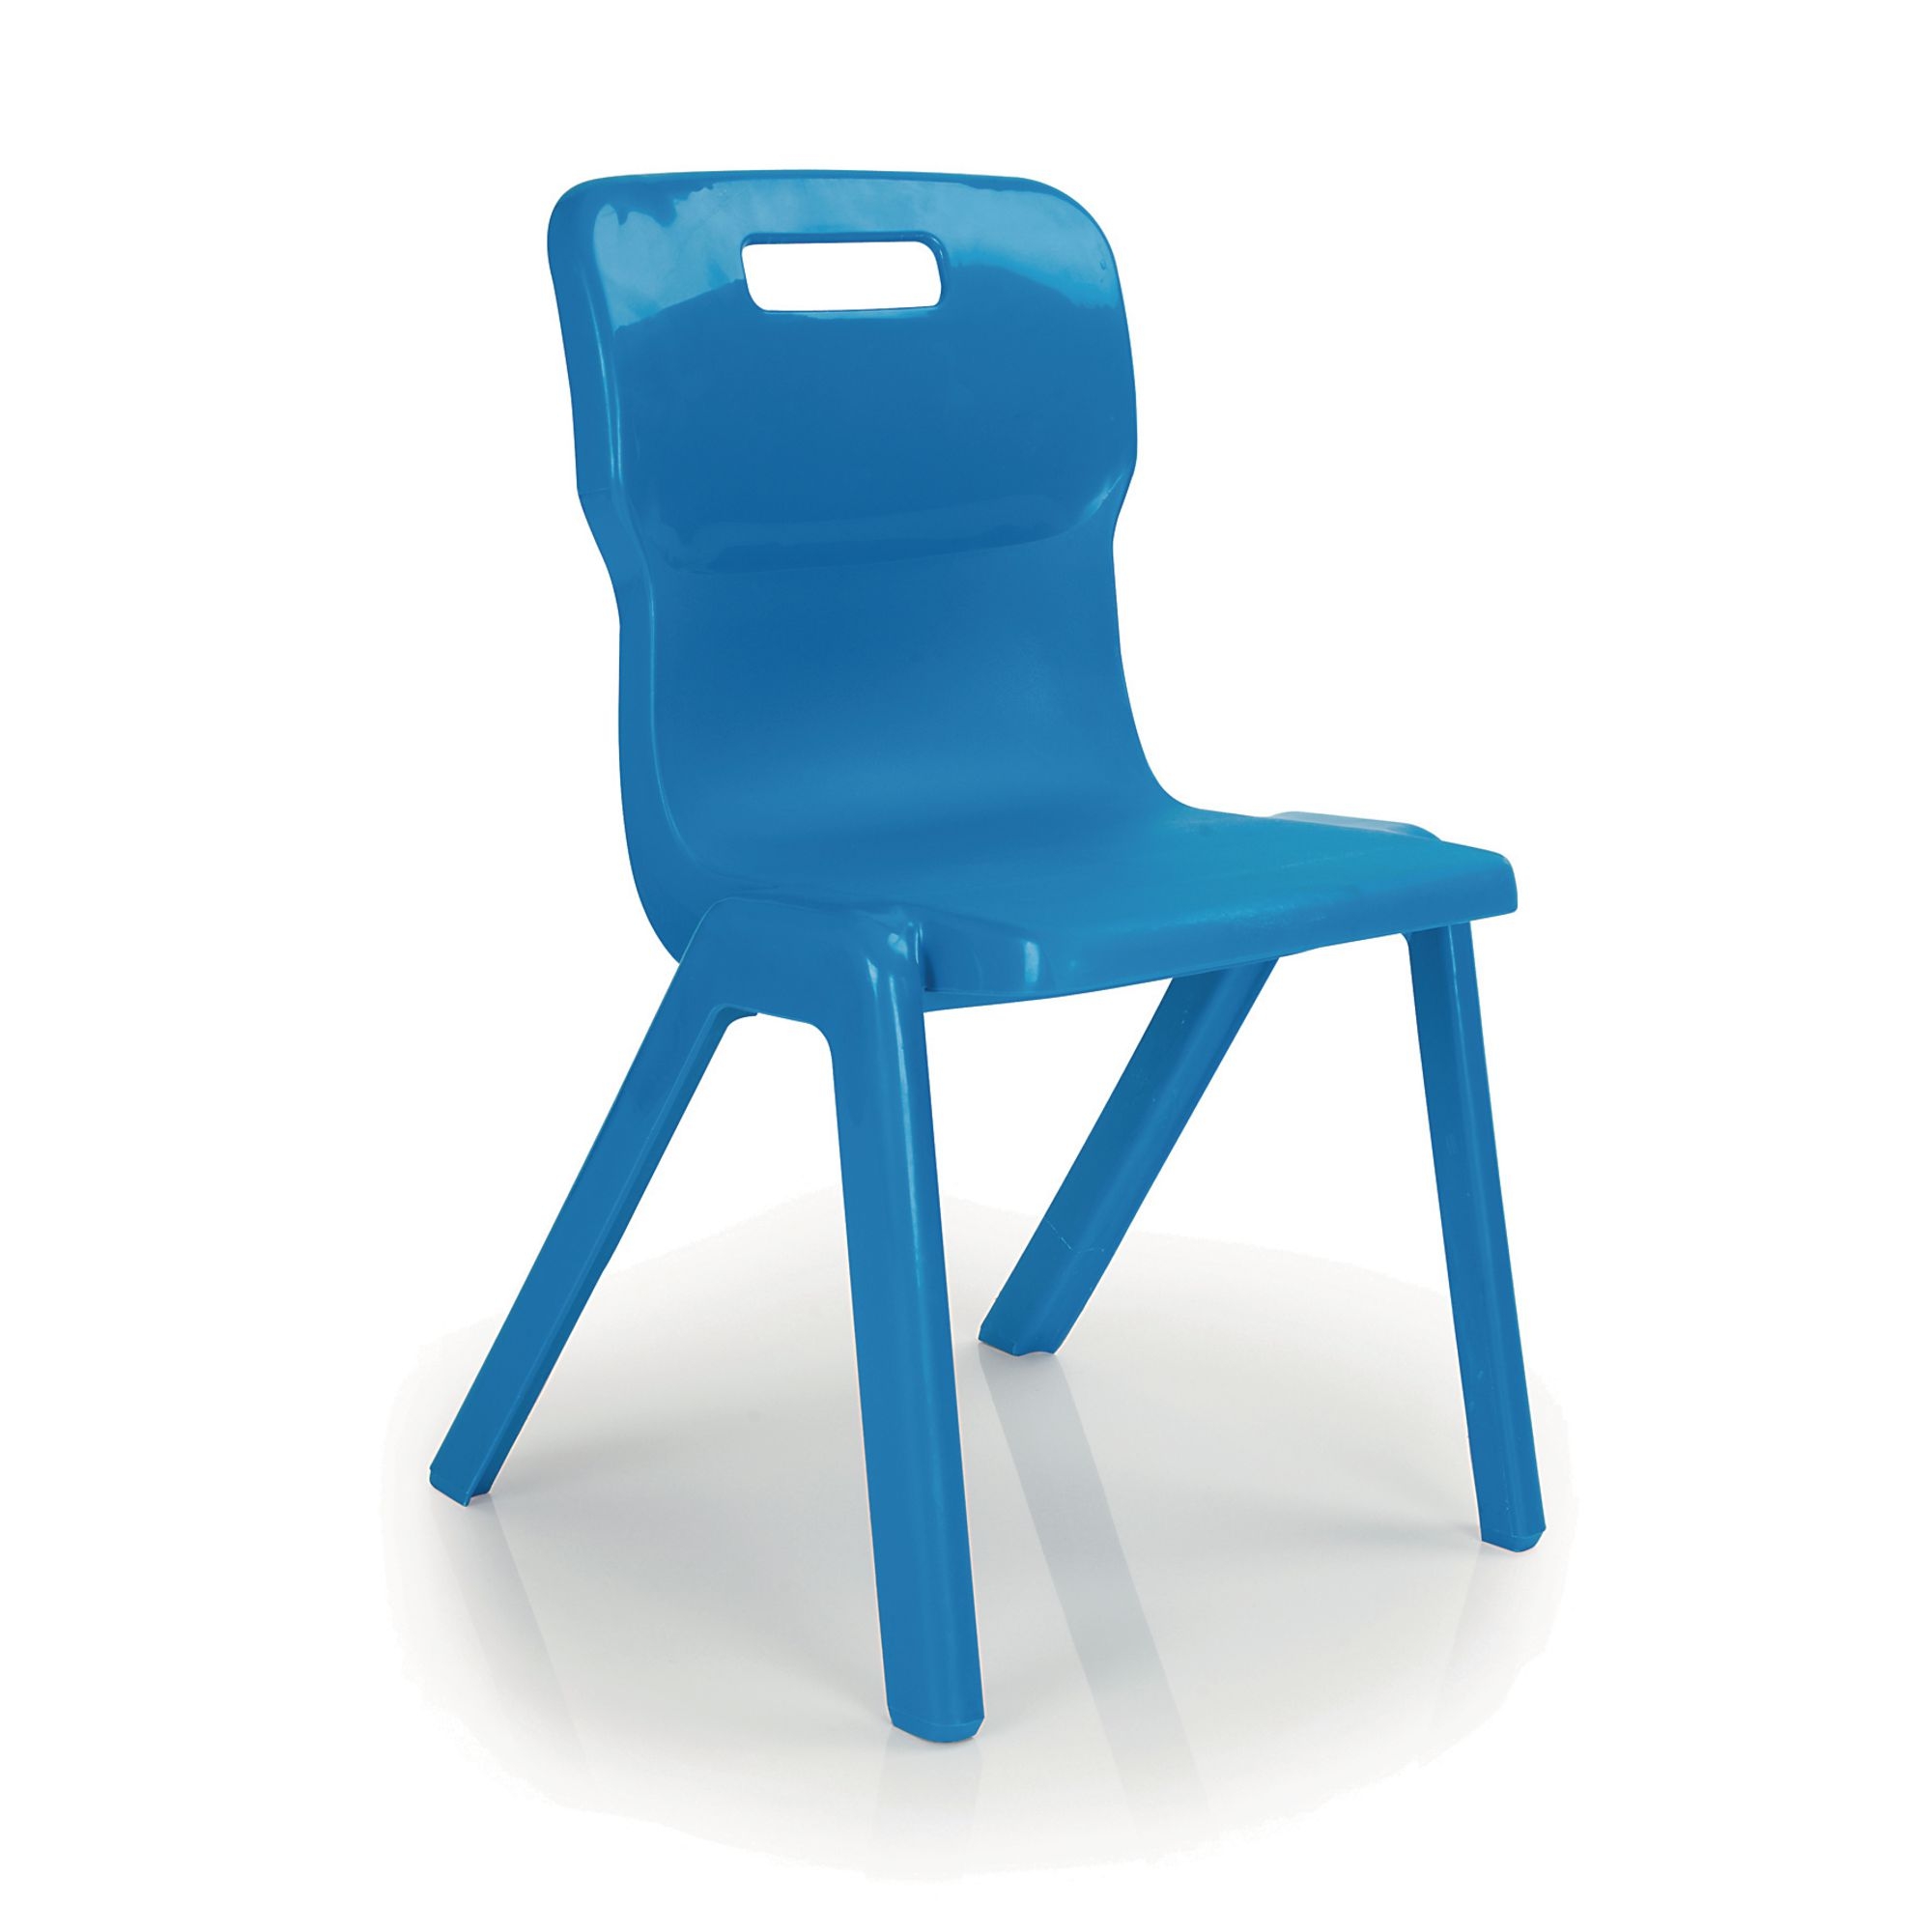 One Piece Titan Chair - Size 2 Ages 4-6 Blue